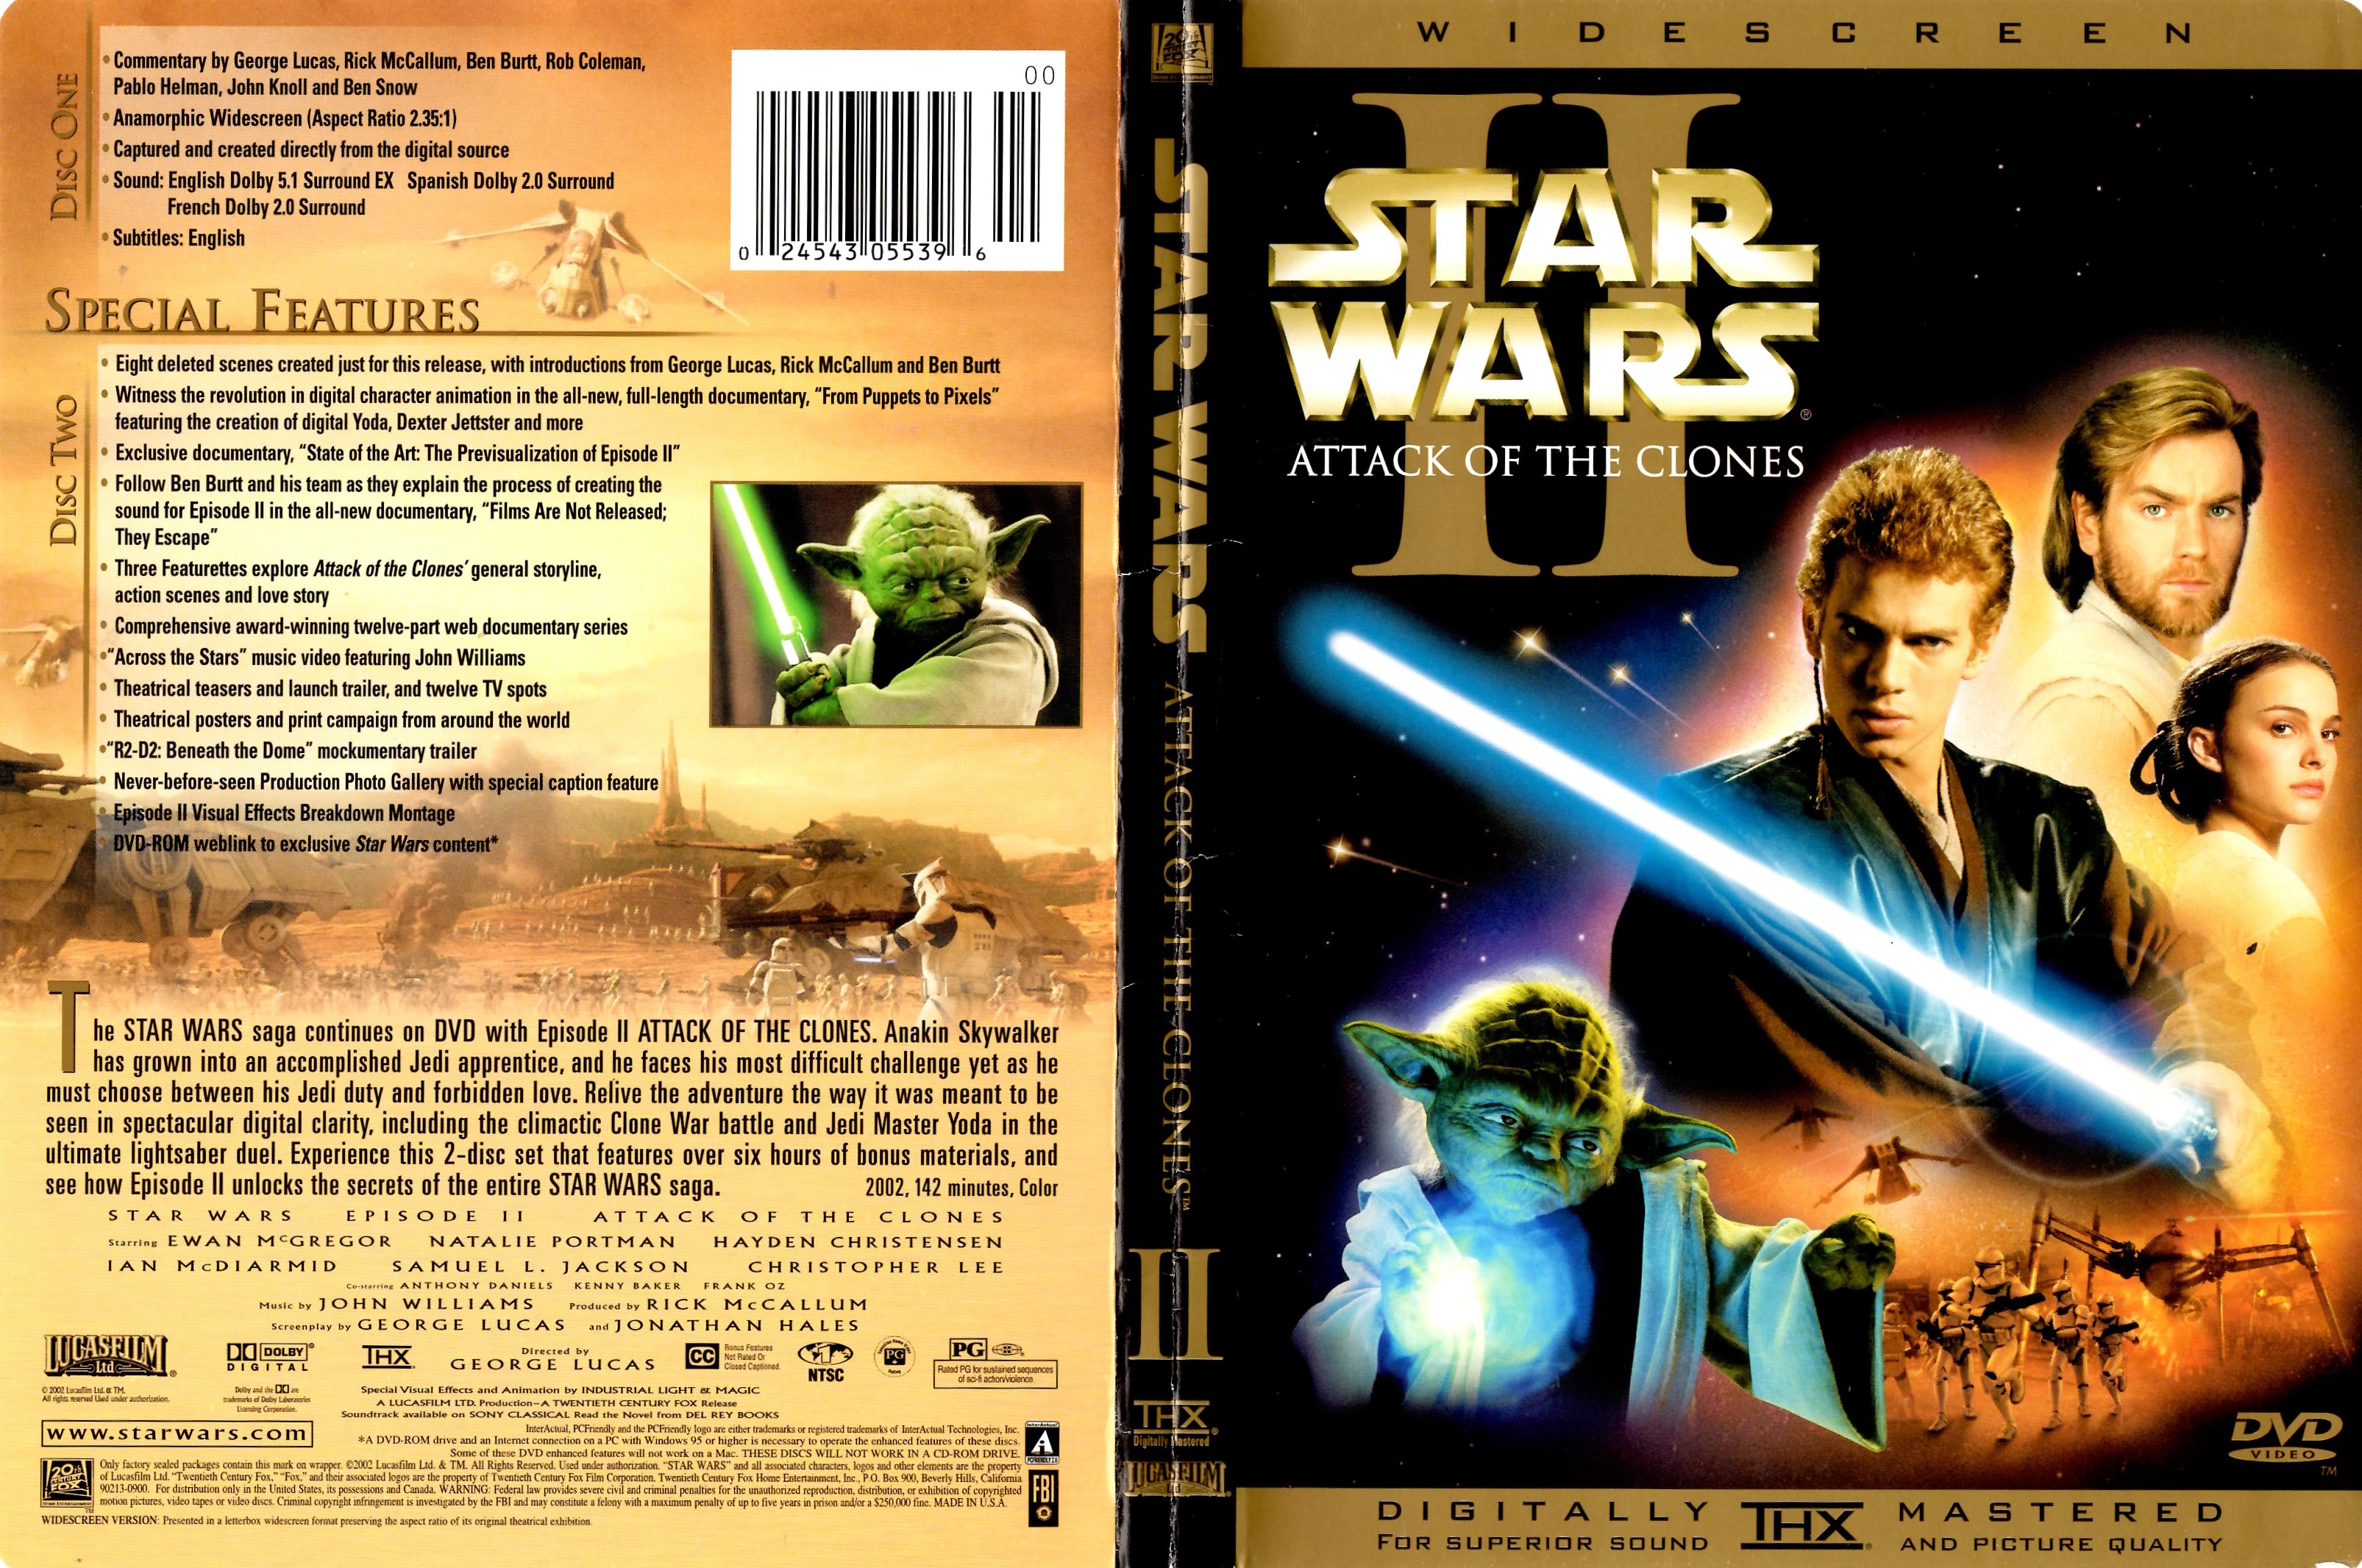 Star Wars Episode I: The Phantom Menace, DVD Database